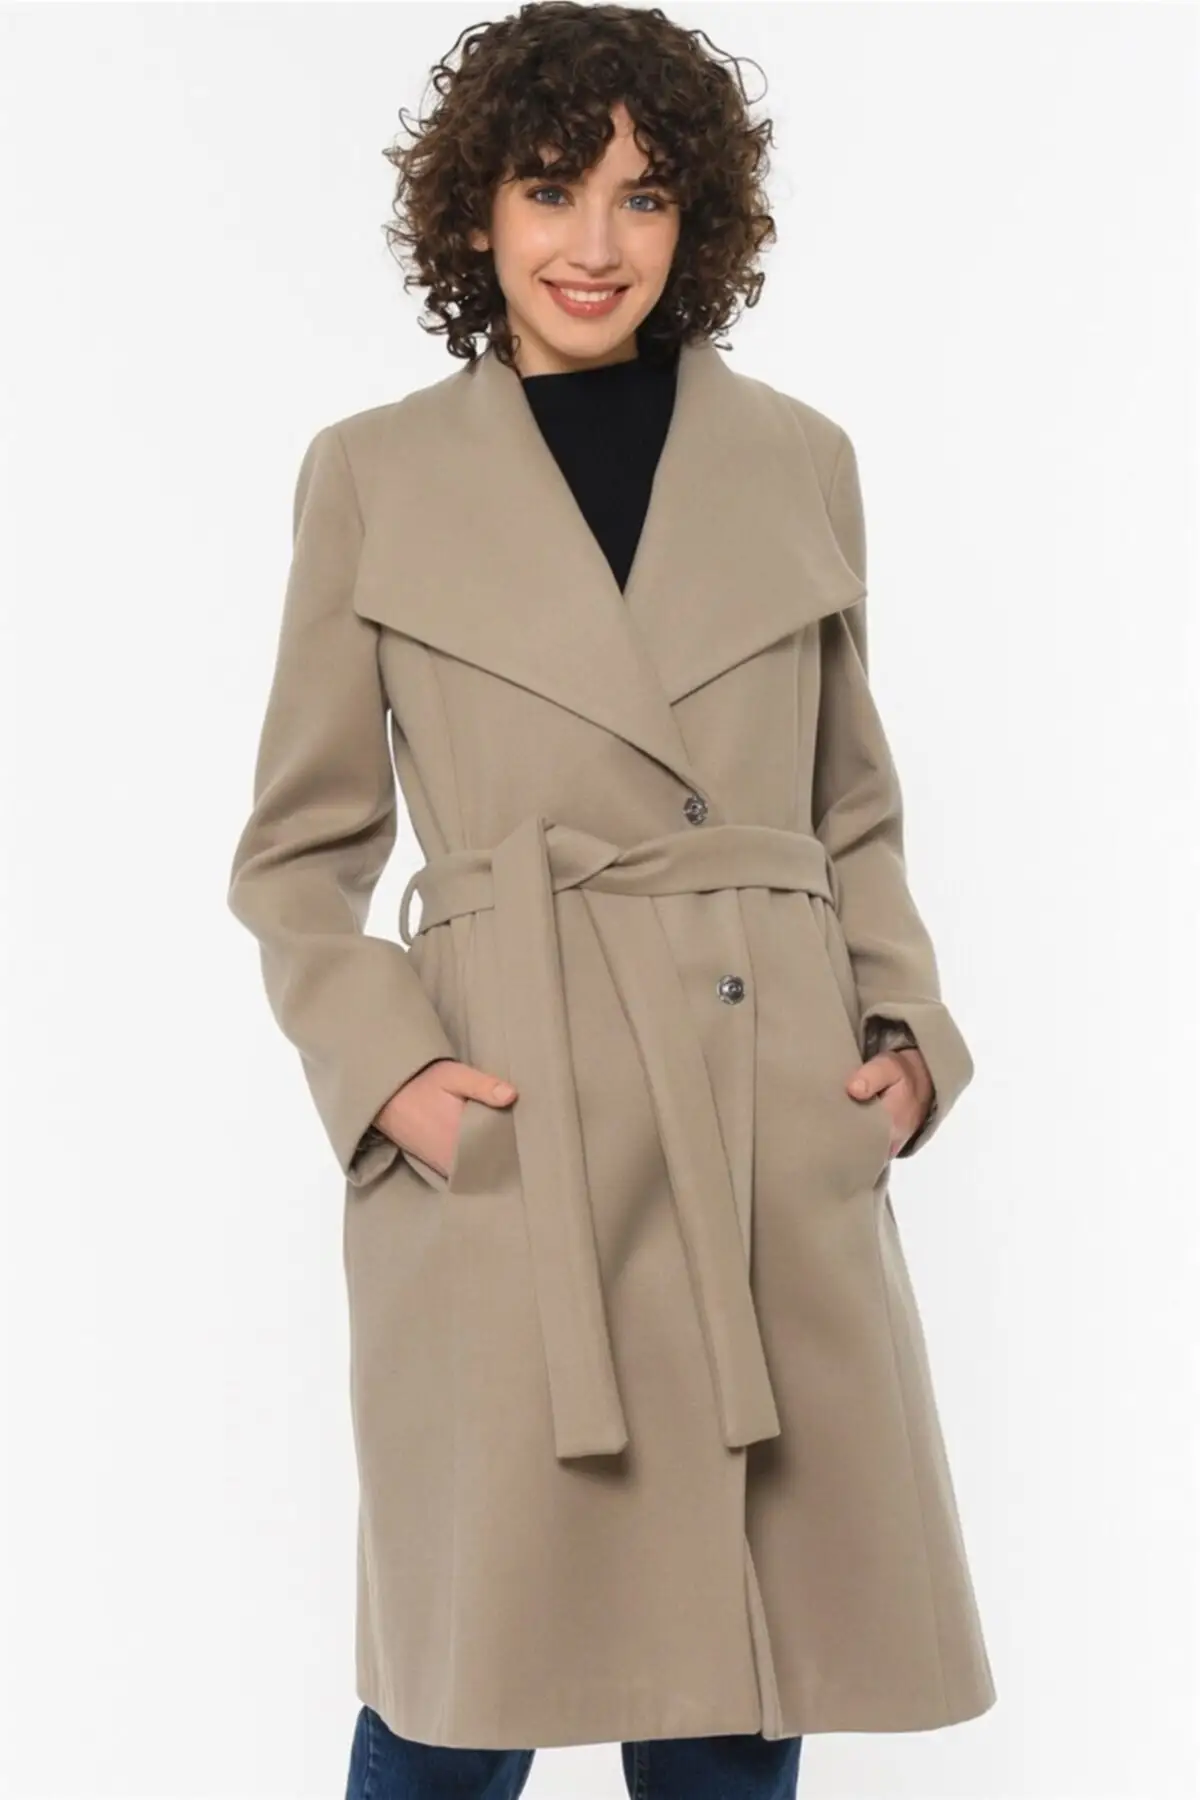 Women's Coats Beige Long Sleeve Patternless Thick Buttoned Belt Stylish Elegant 2021 Winter Autumn Fashion Outerwear Coats